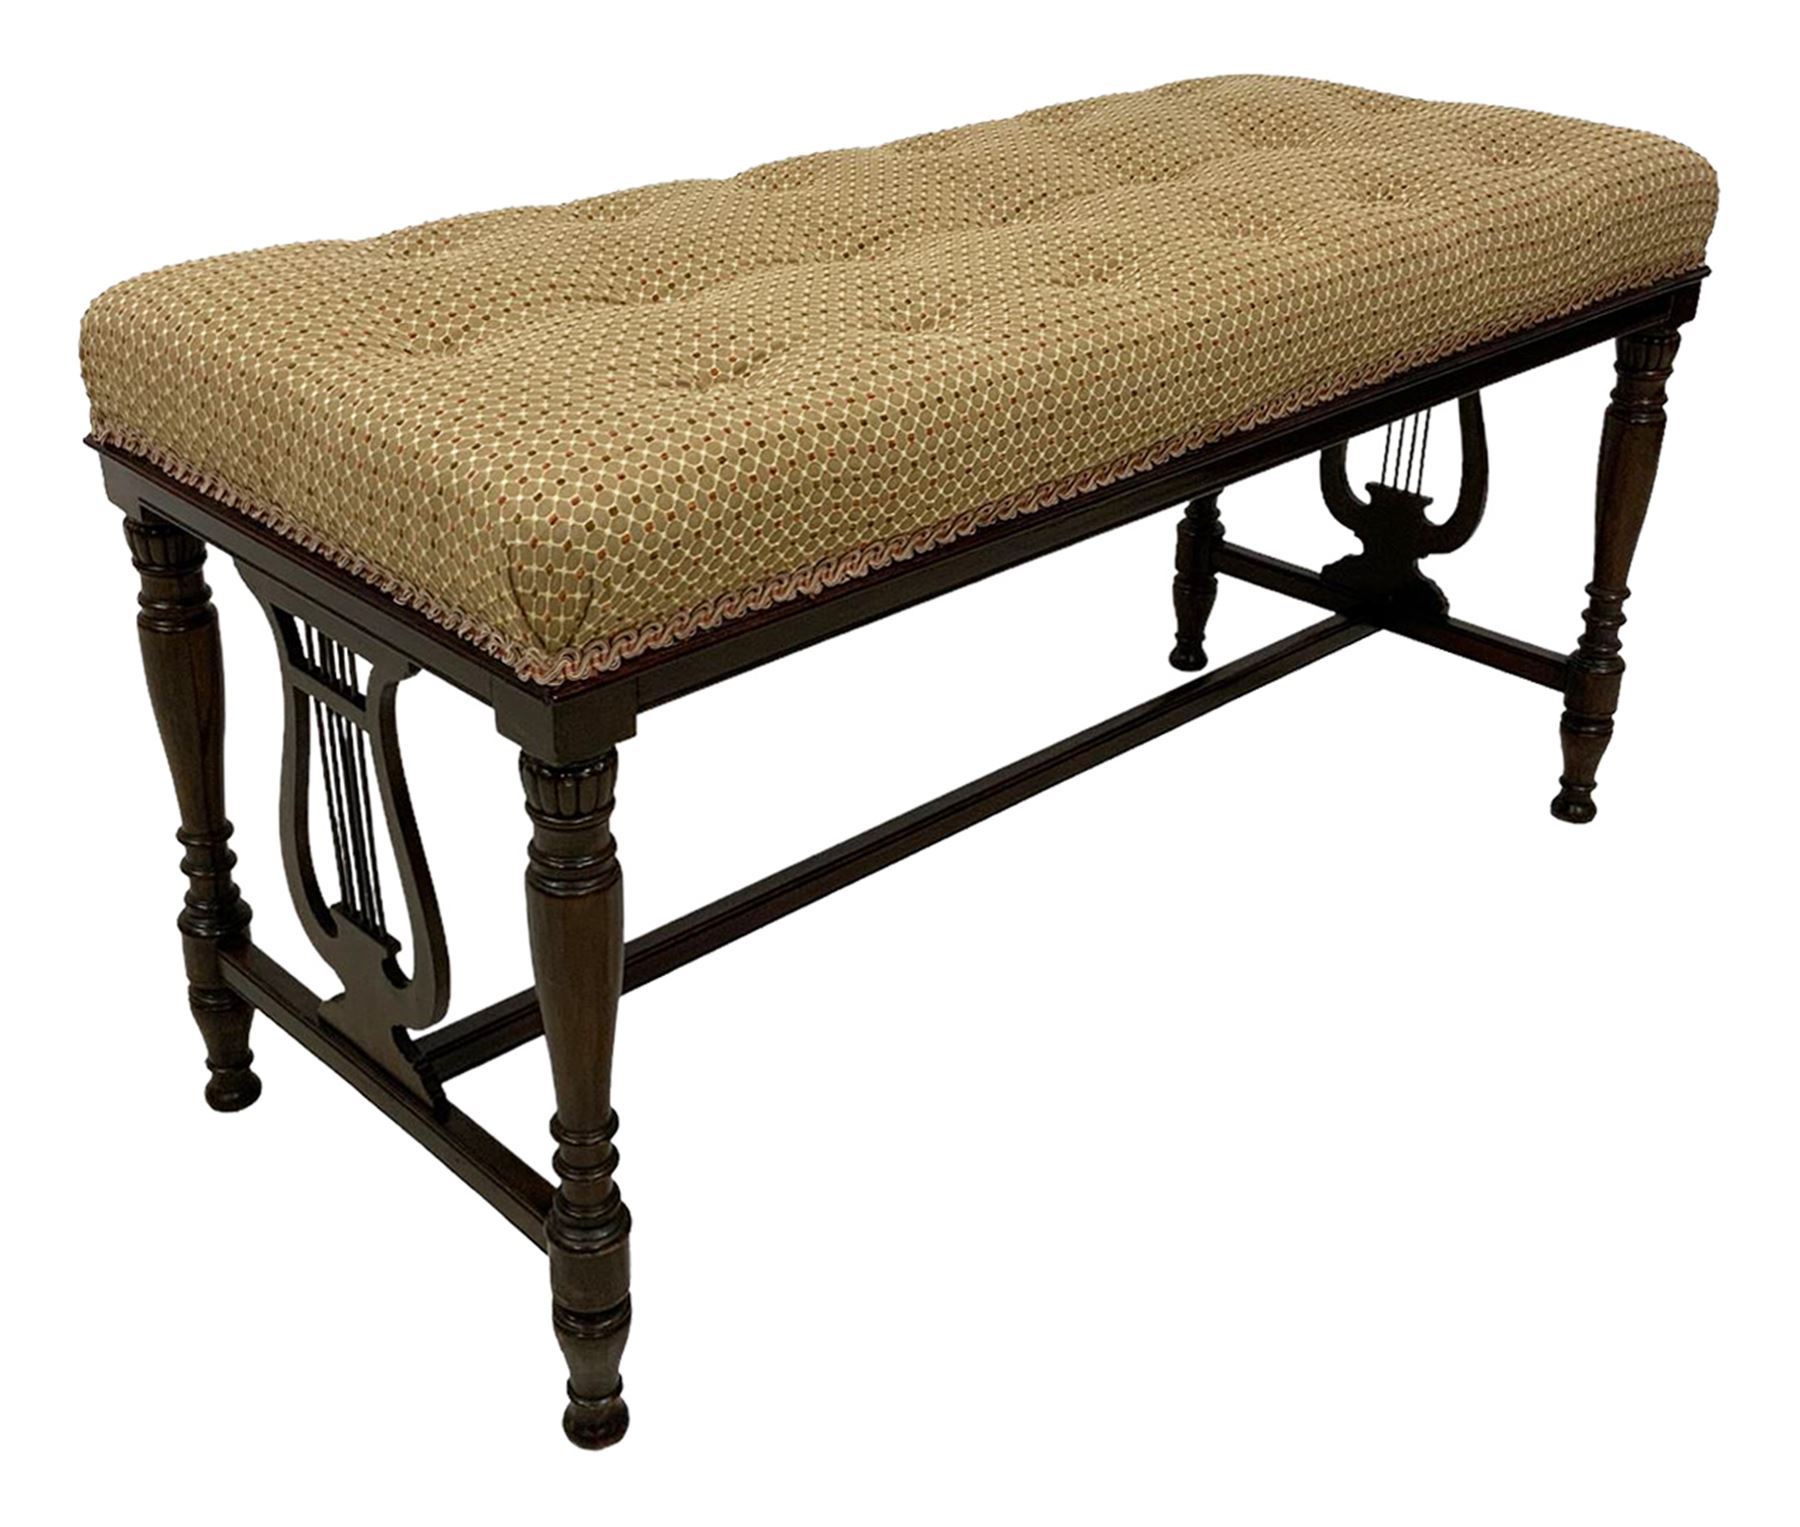 Regency design walnut piano duet stool - Image 3 of 8